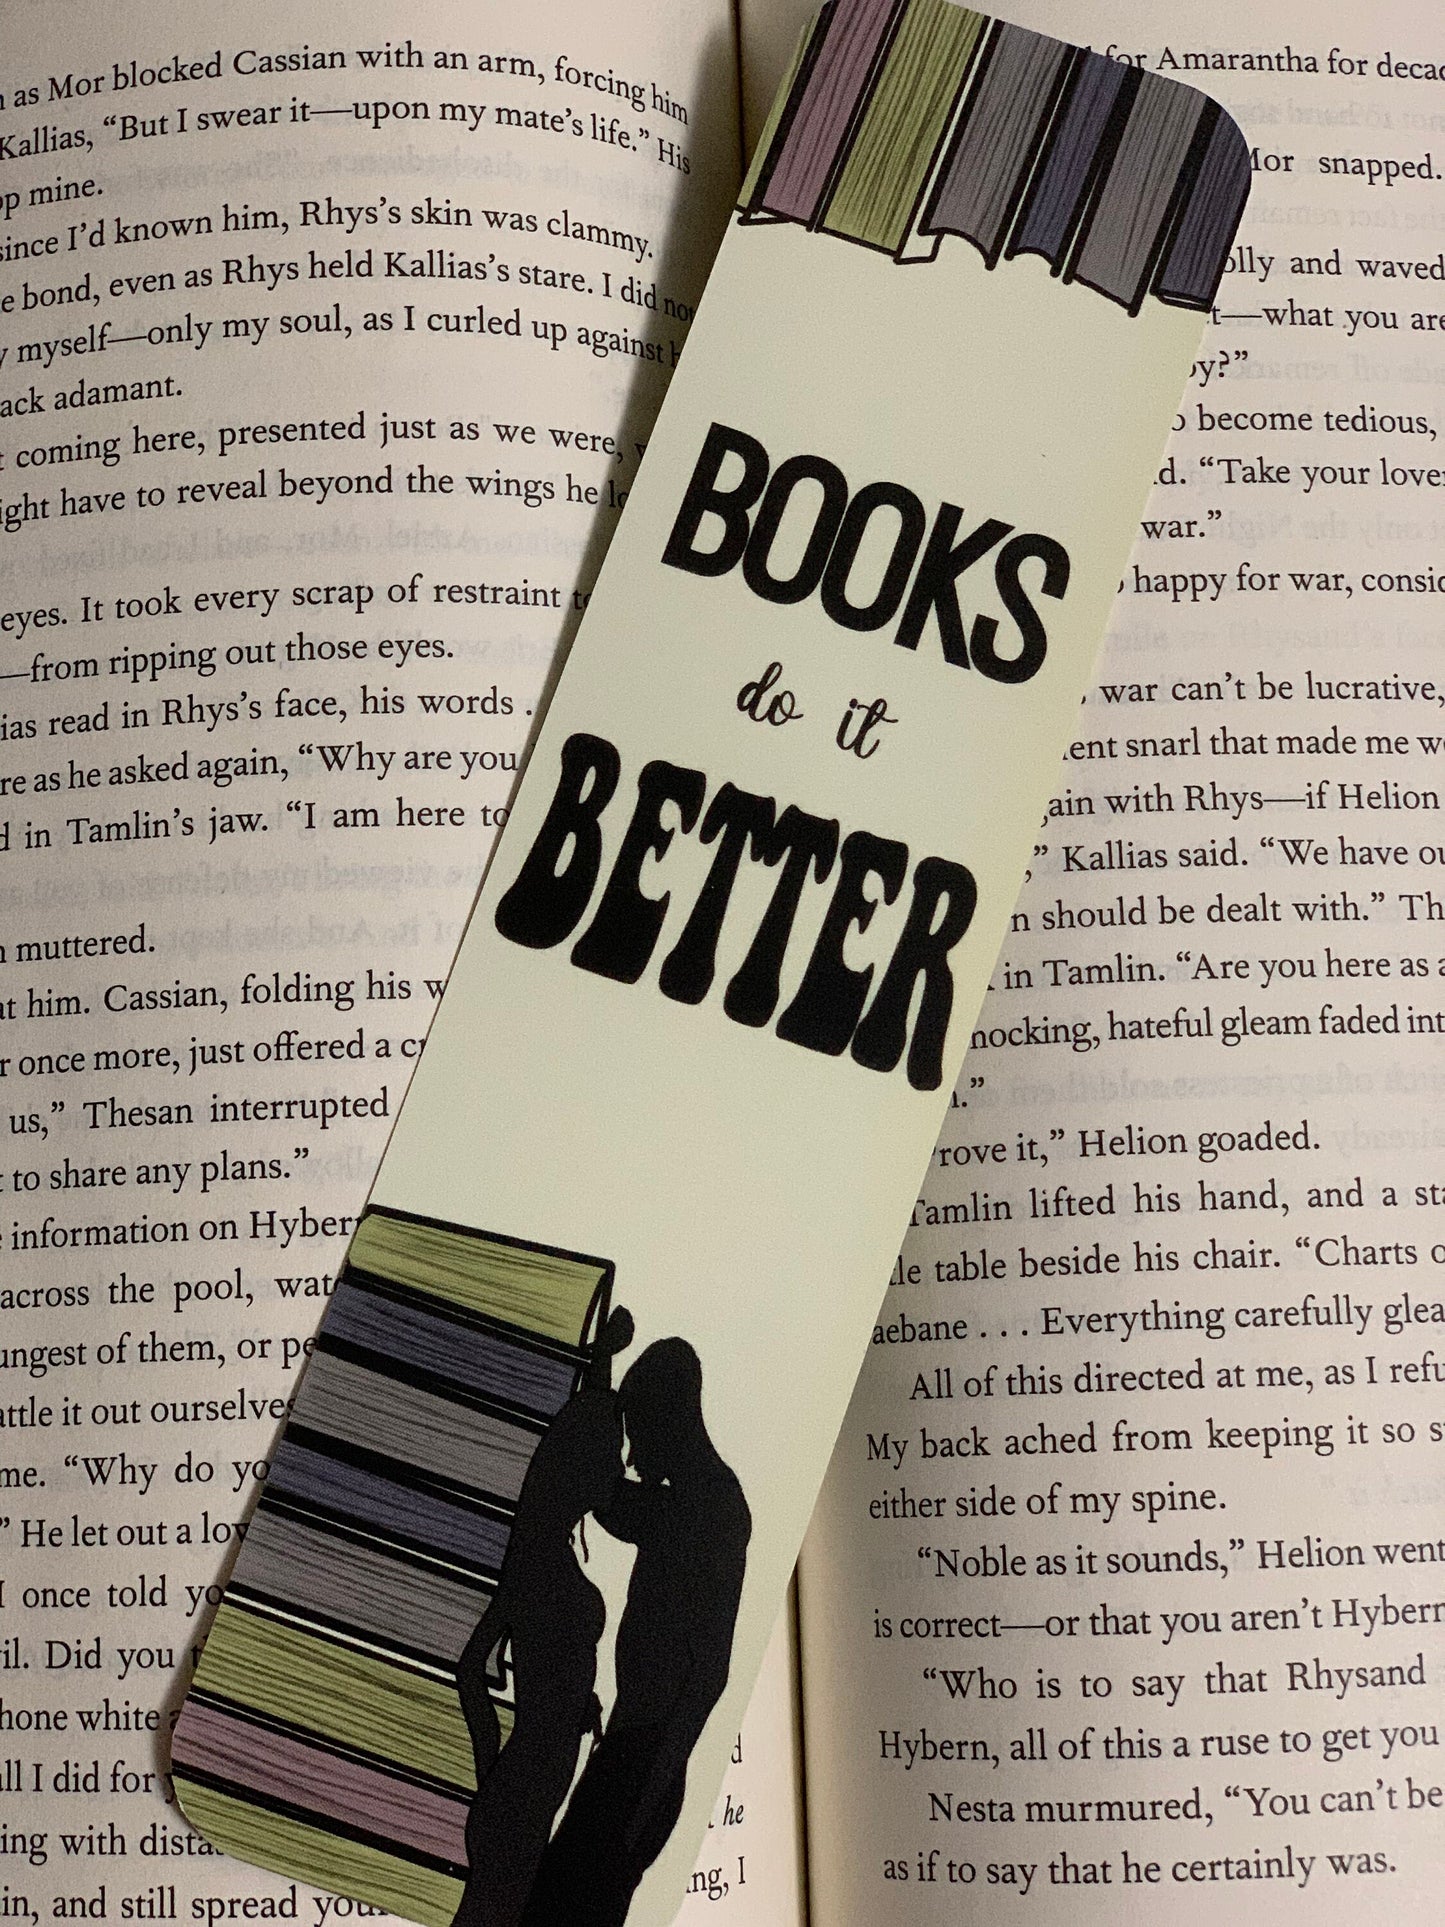 8x2 in Books Do It Better Bookmark